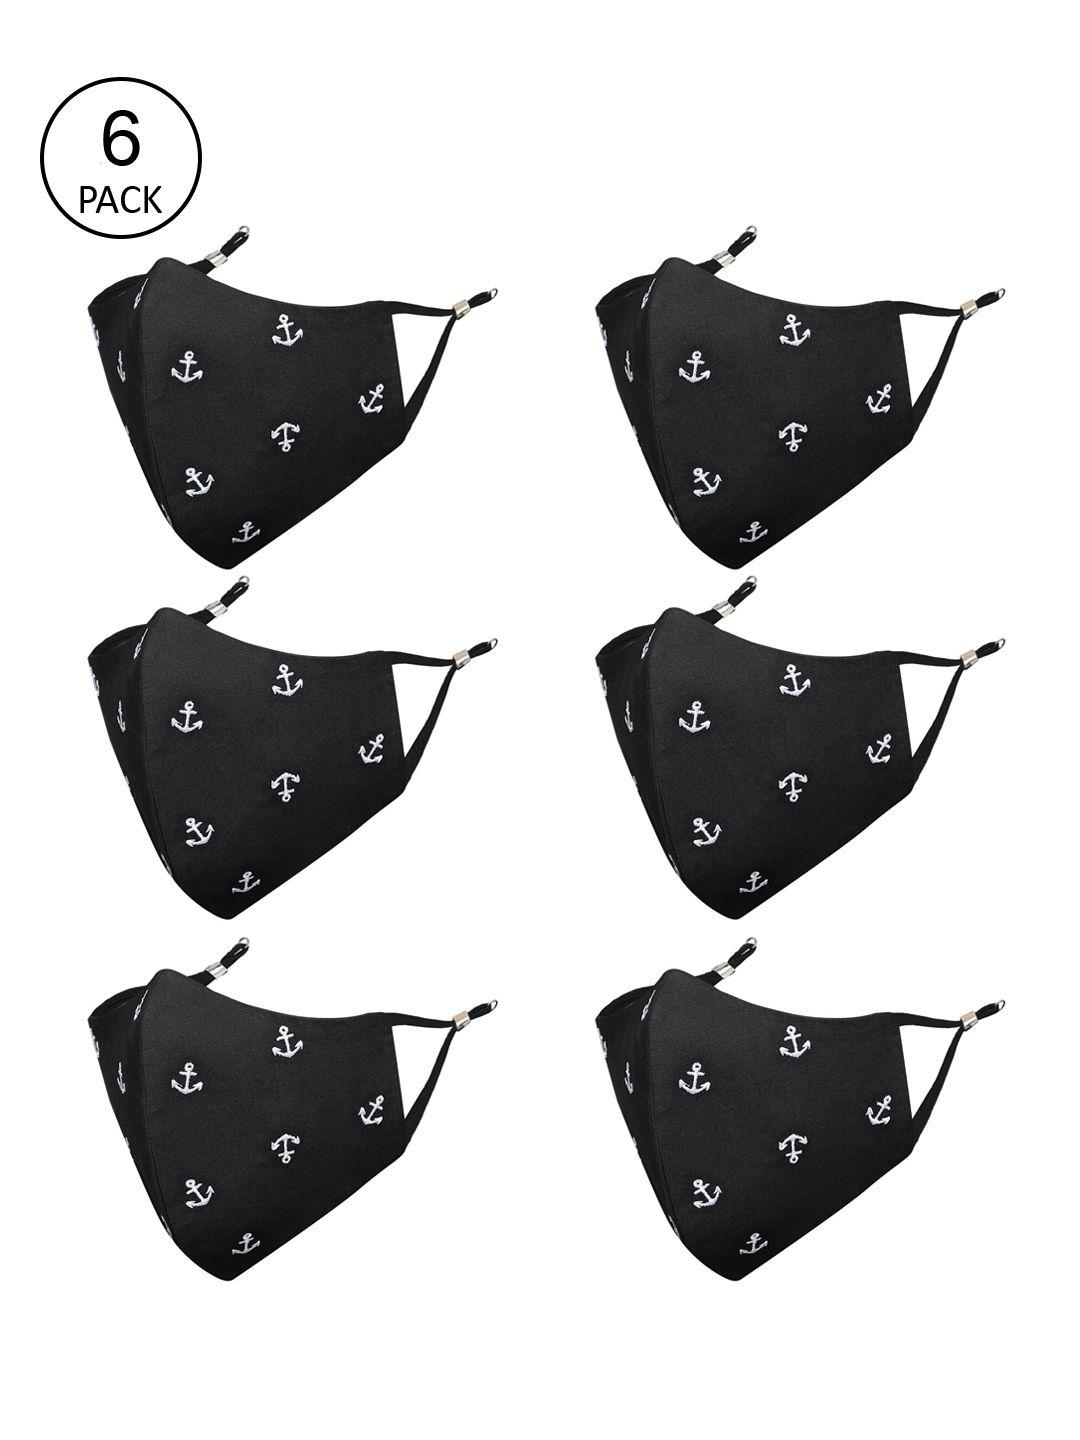 masq men pack of 6 black & white printed 4-ply pure cotton cloth masks